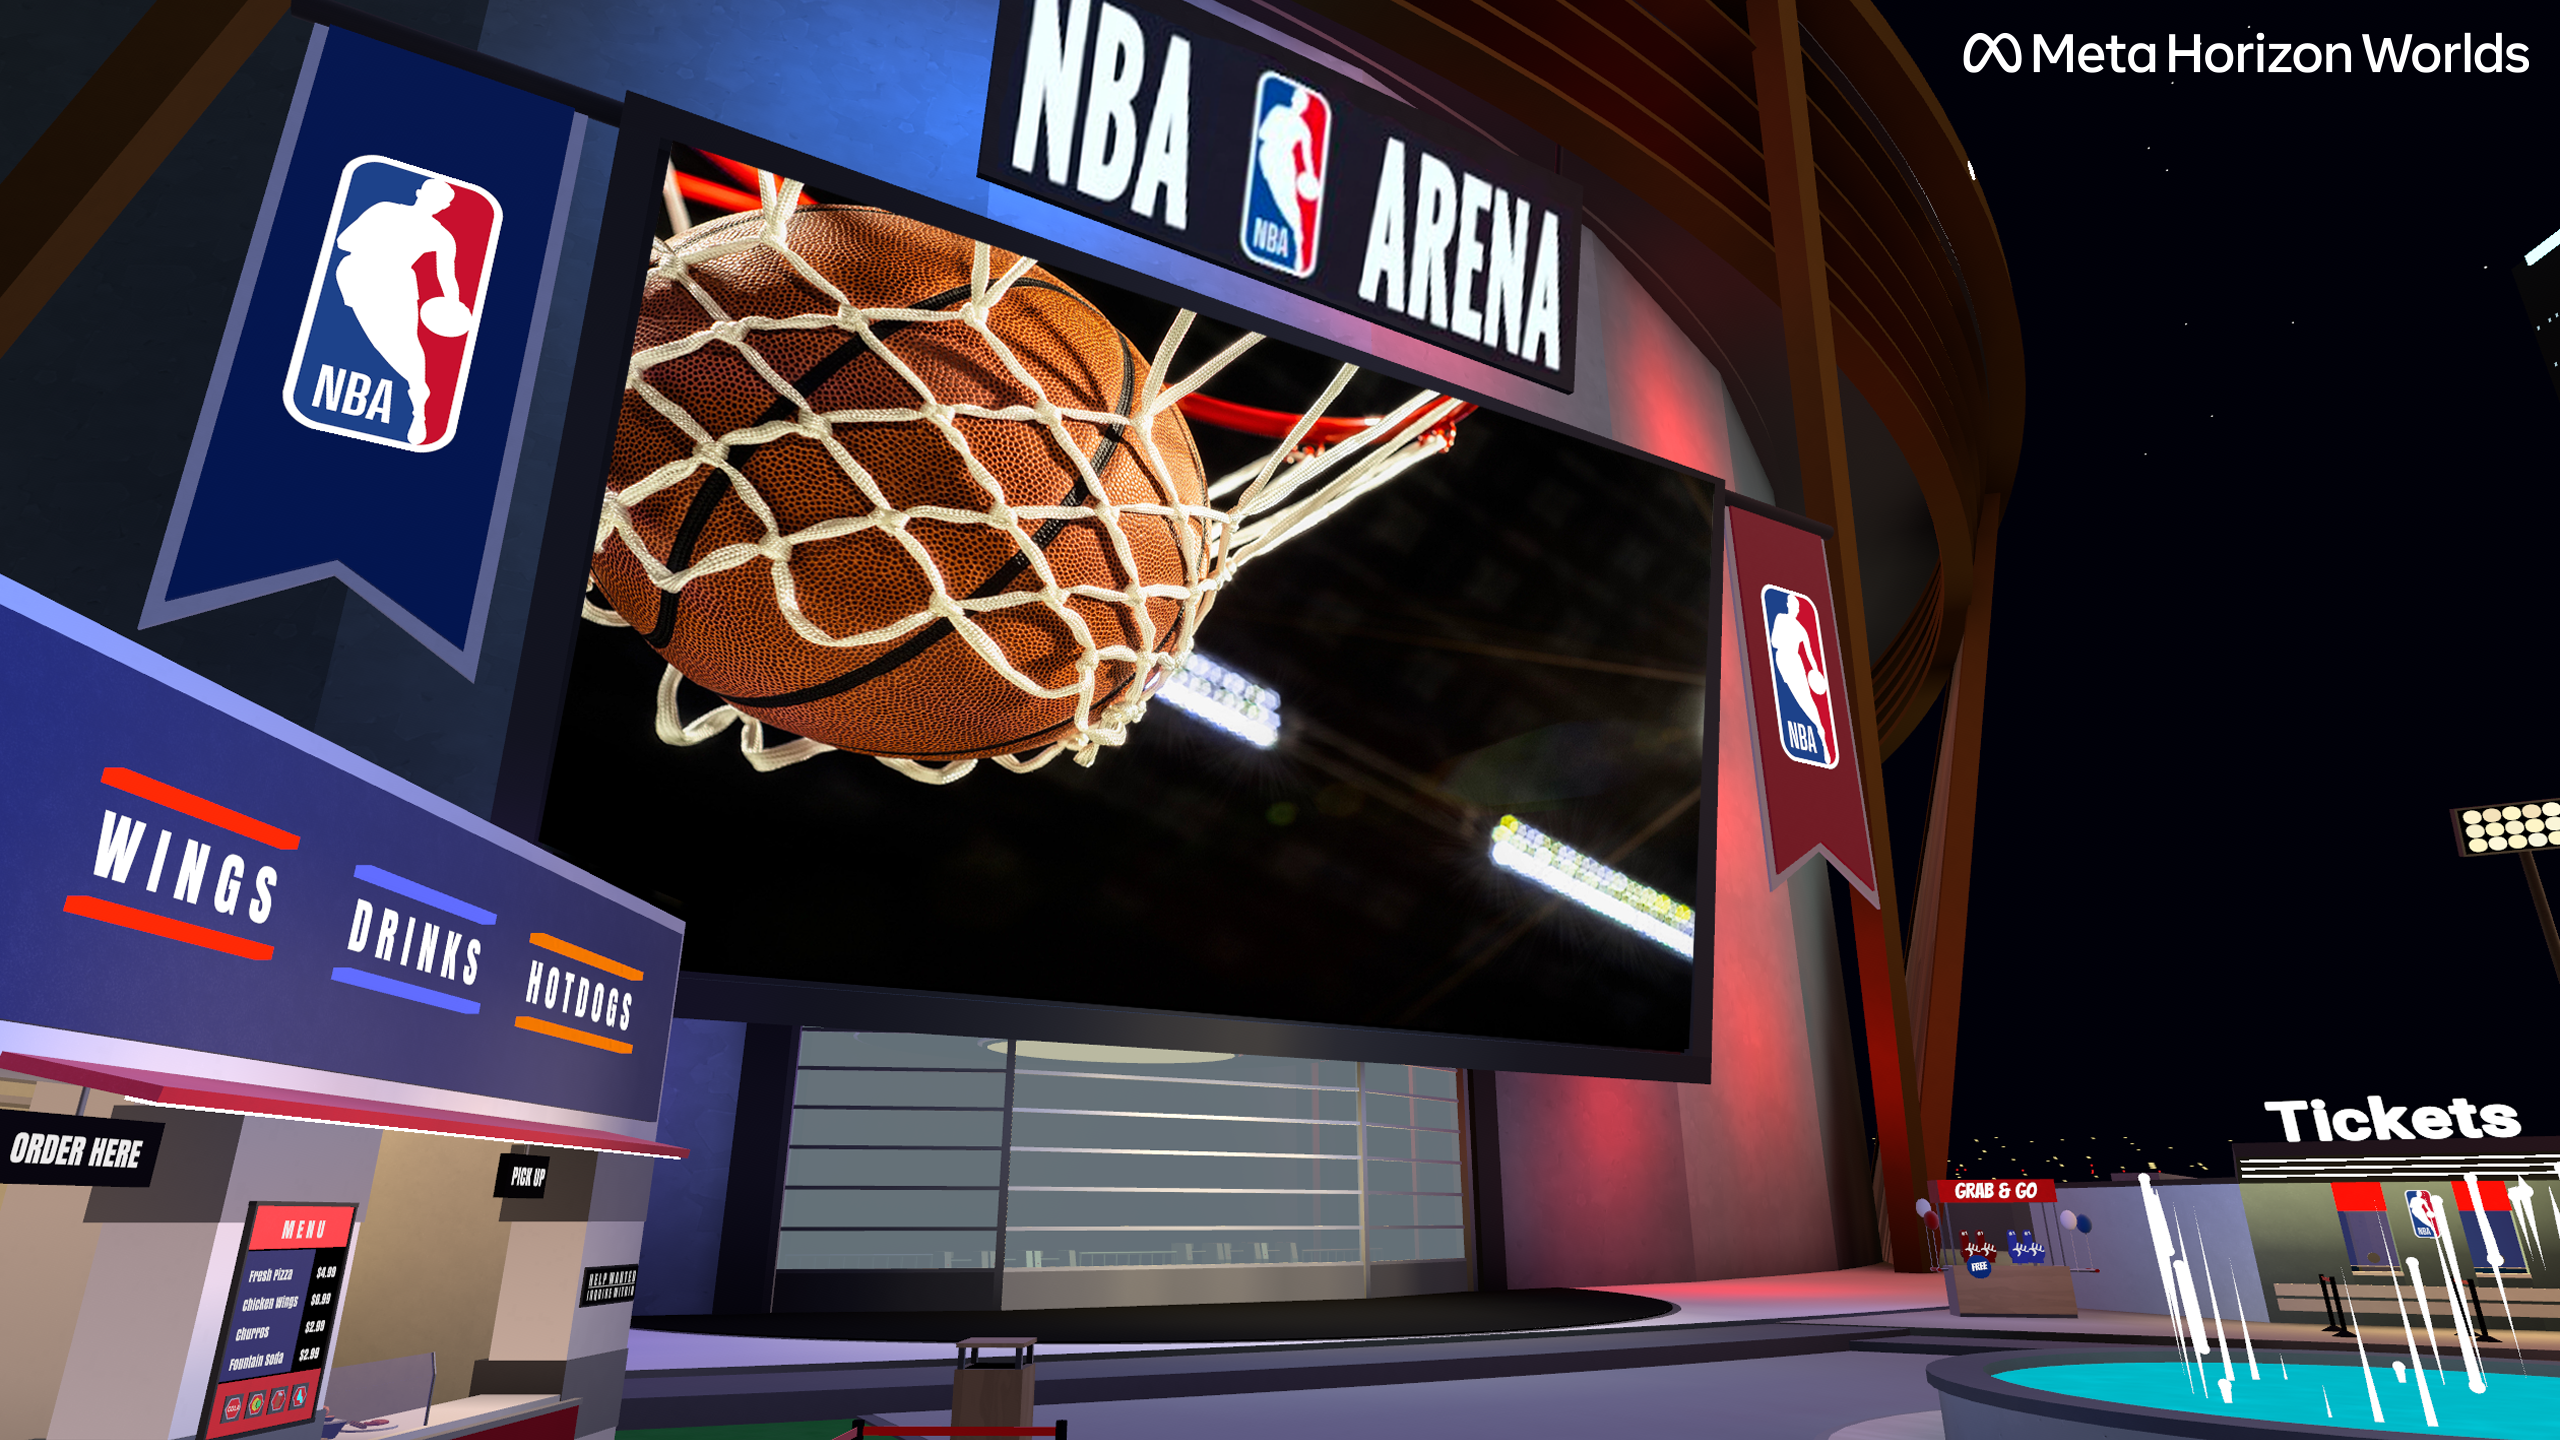 Verizon Adds NBA Streaming Services to '+Play' Platform - Media Play News